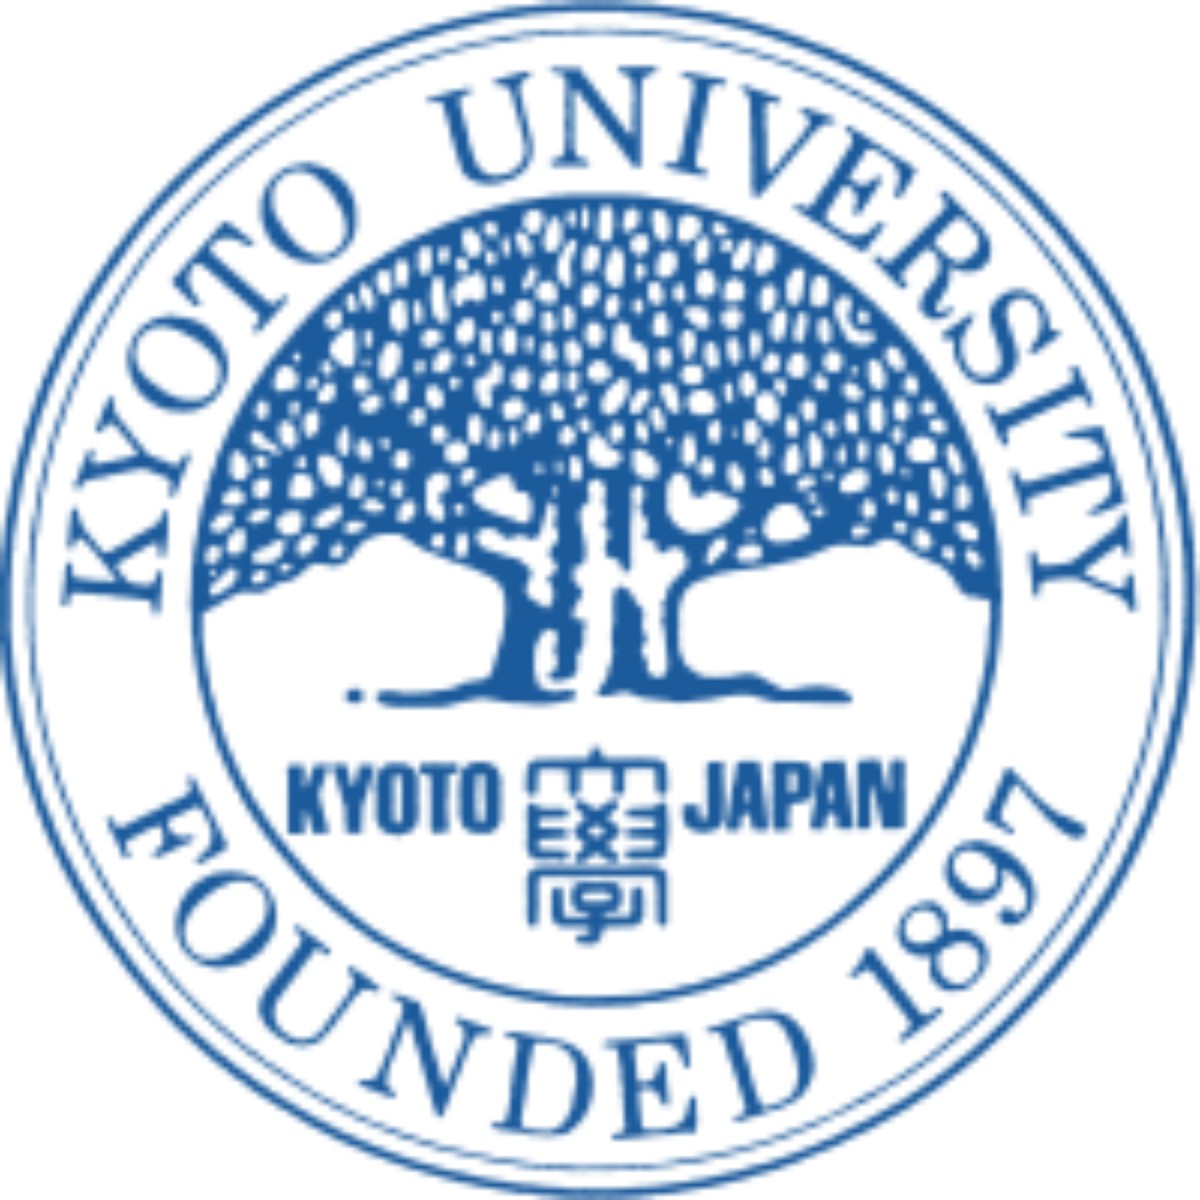 Canon Foundation/ Kyoto University Japan 2023 Africa Exchange Program